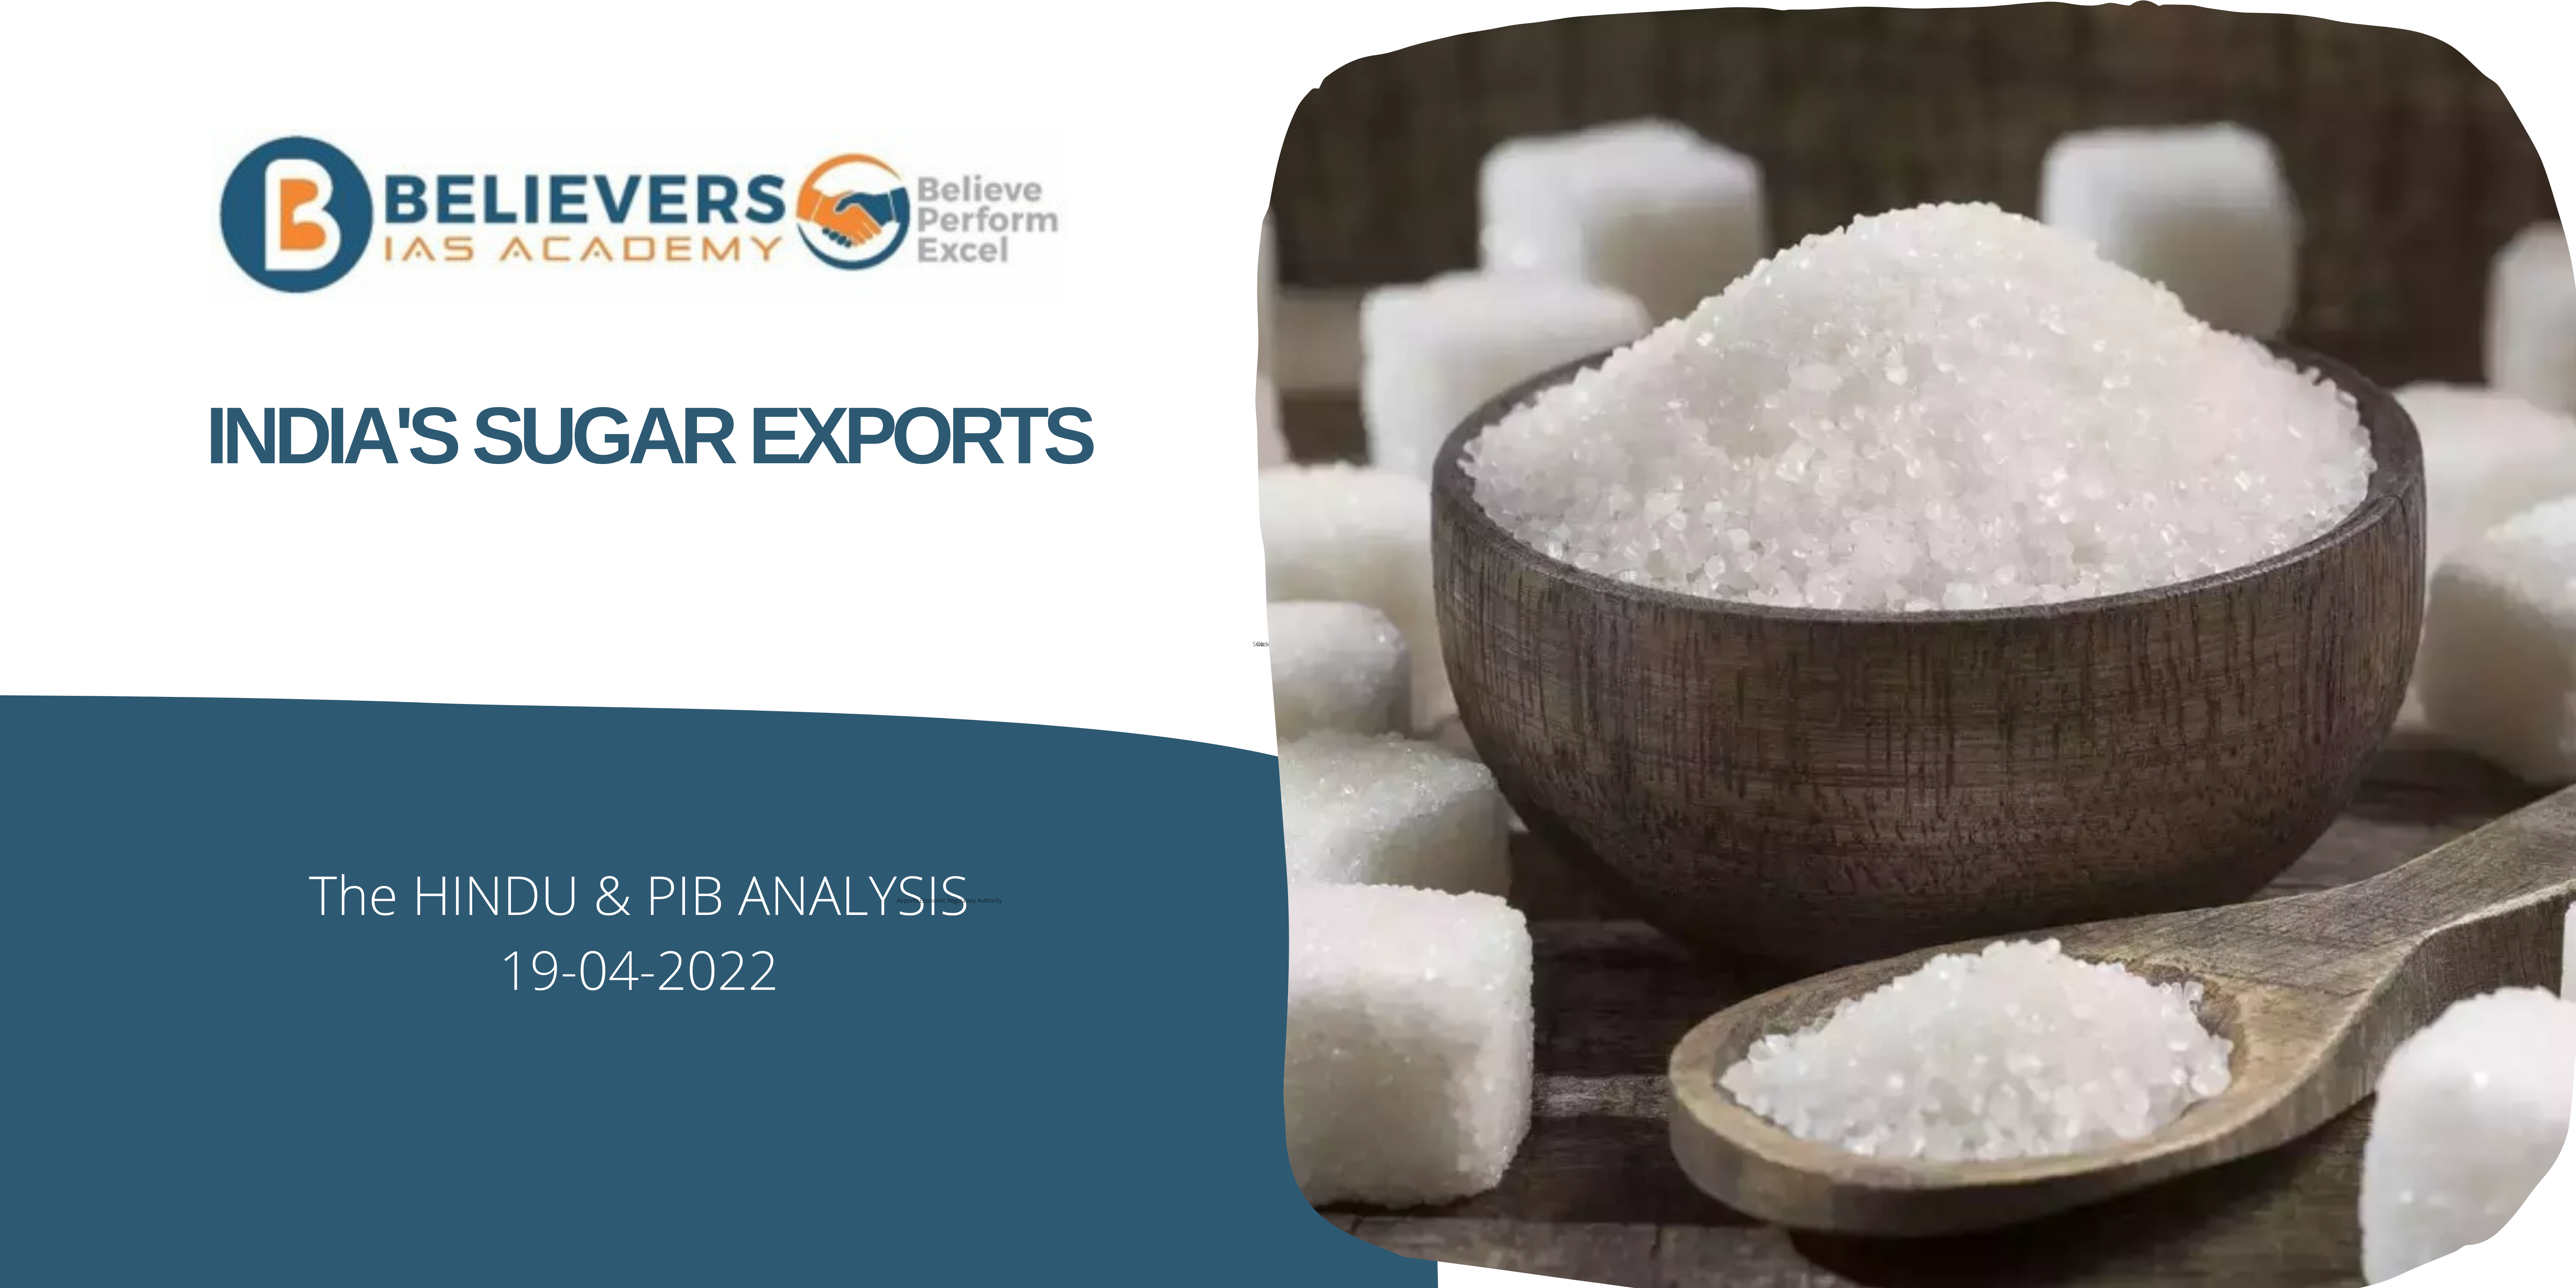 IAS Current affairs - India's Sugar Exports